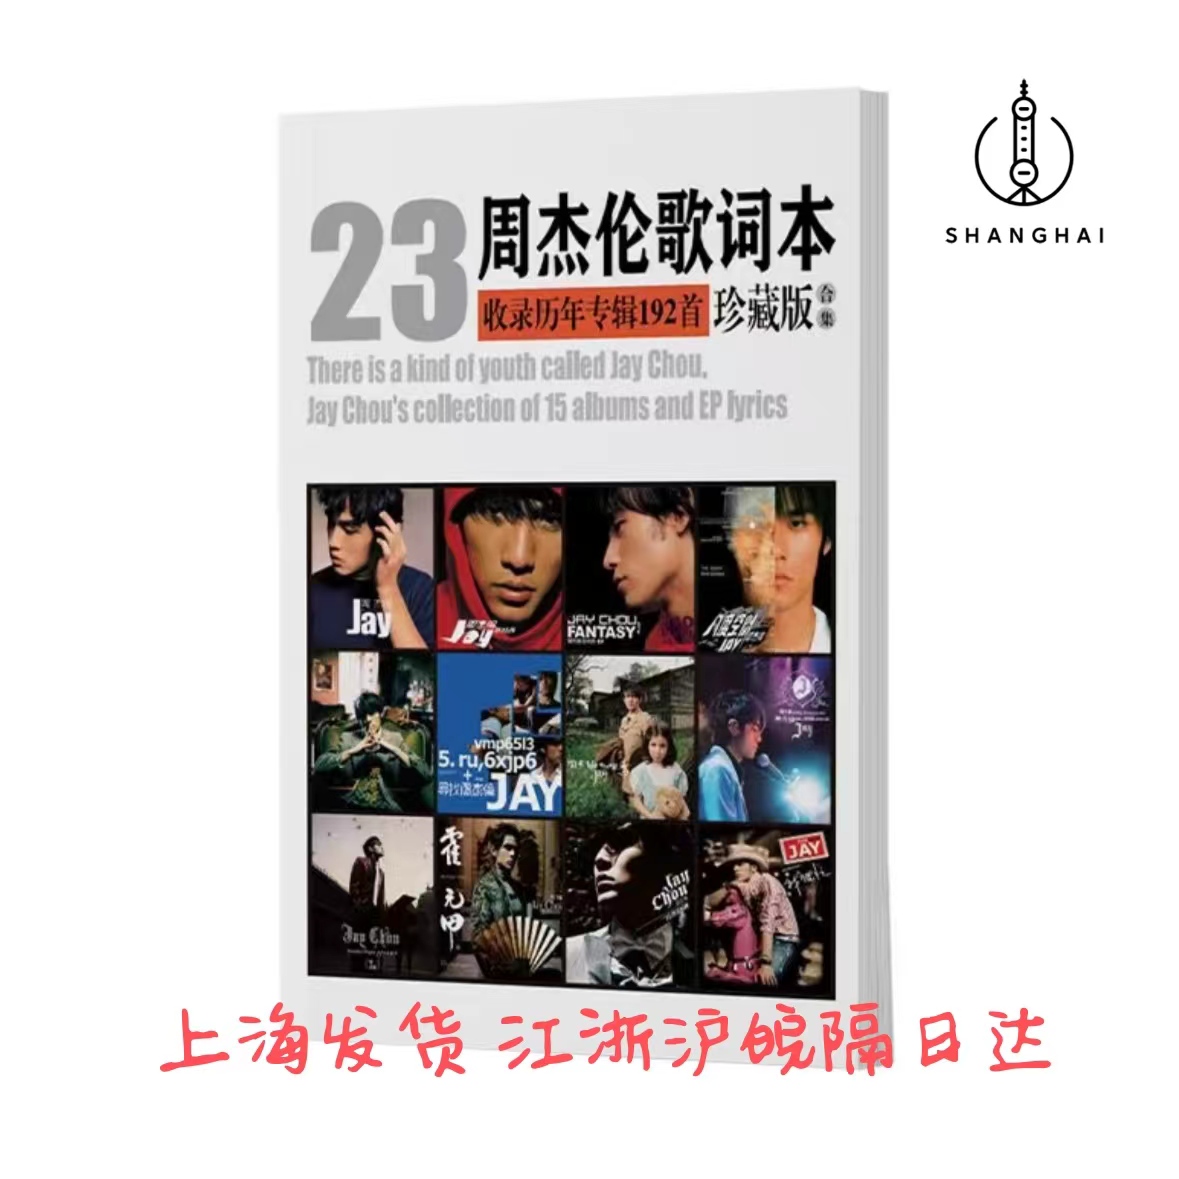 Jay Chou-Jeren Lin Junjie Full Album 192 First-free Lyrics Notepad Notepad Notes Portable Companion Gift fan-Taobao